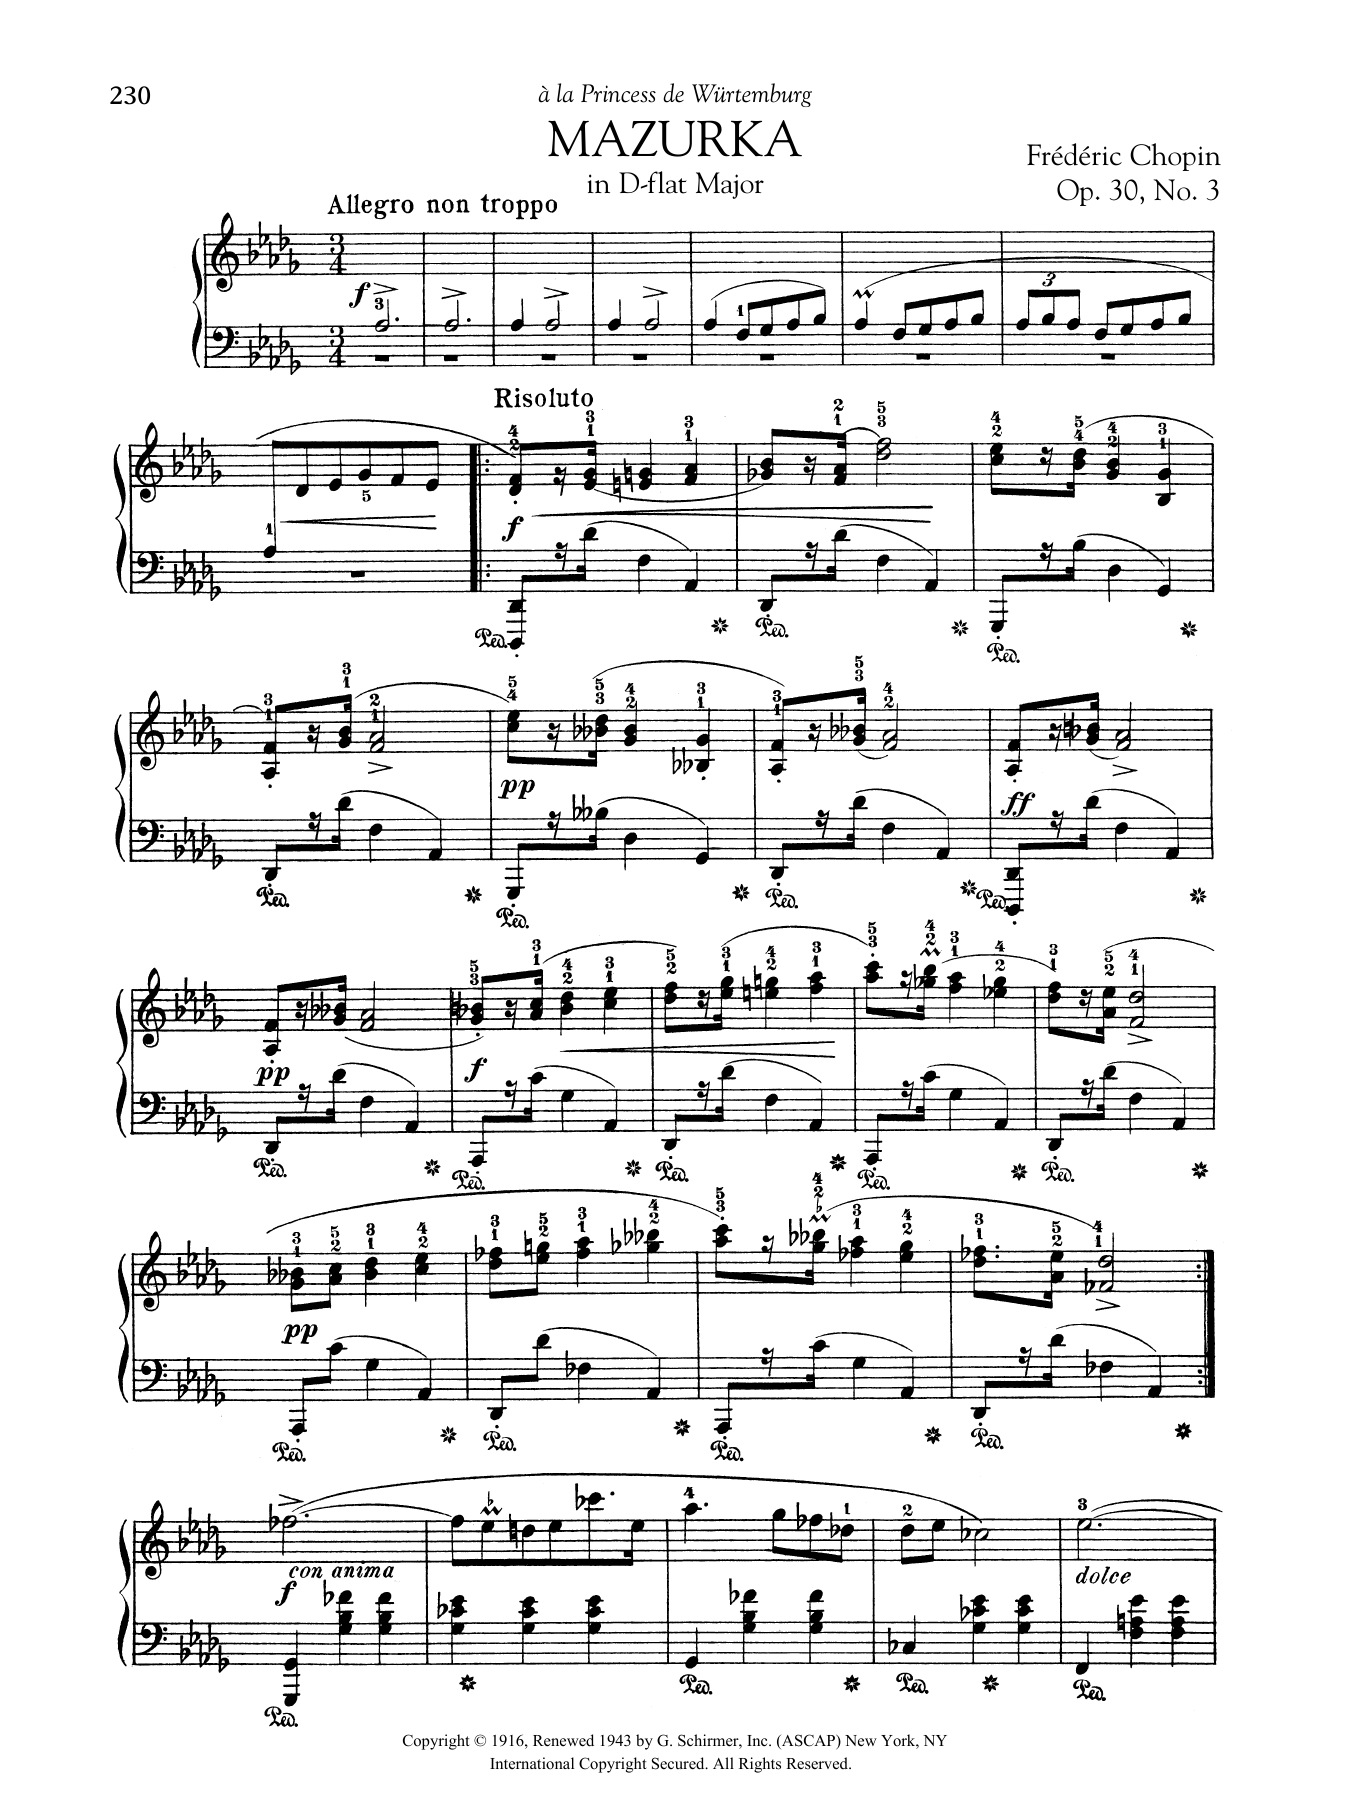 Download Frederic Chopin Mazurka in D-flat Major, Op. 30, No. 3 Sheet Music